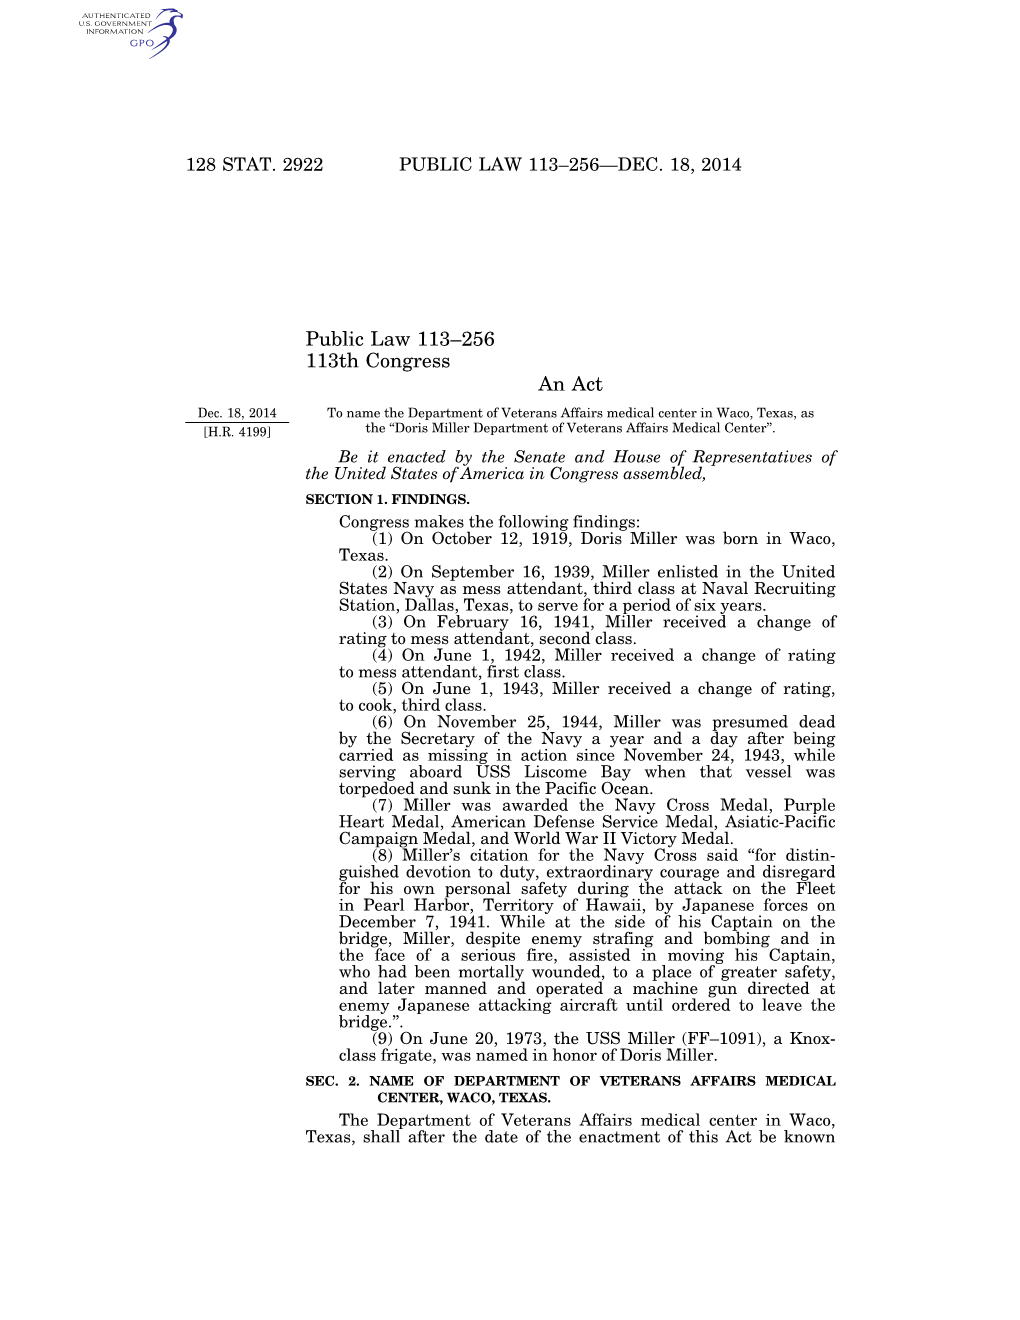 Public Law 113–256 113Th Congress an Act Dec